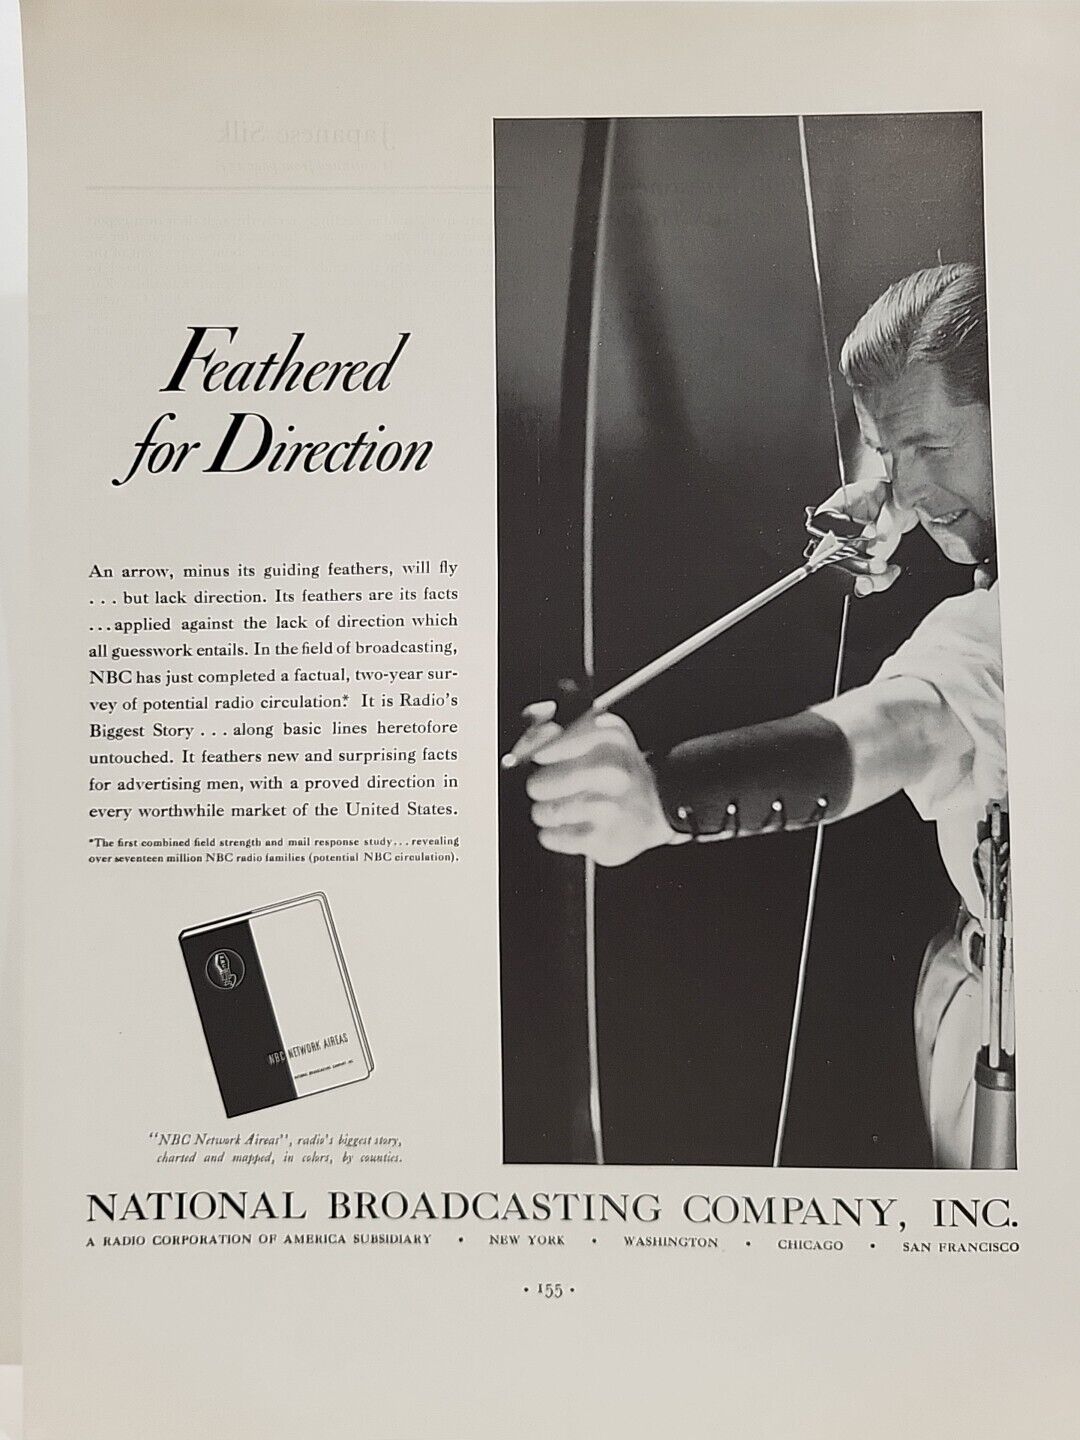 1935 NBC Radio Fortune Magazine Print Advertising Archer Arrow Feathered